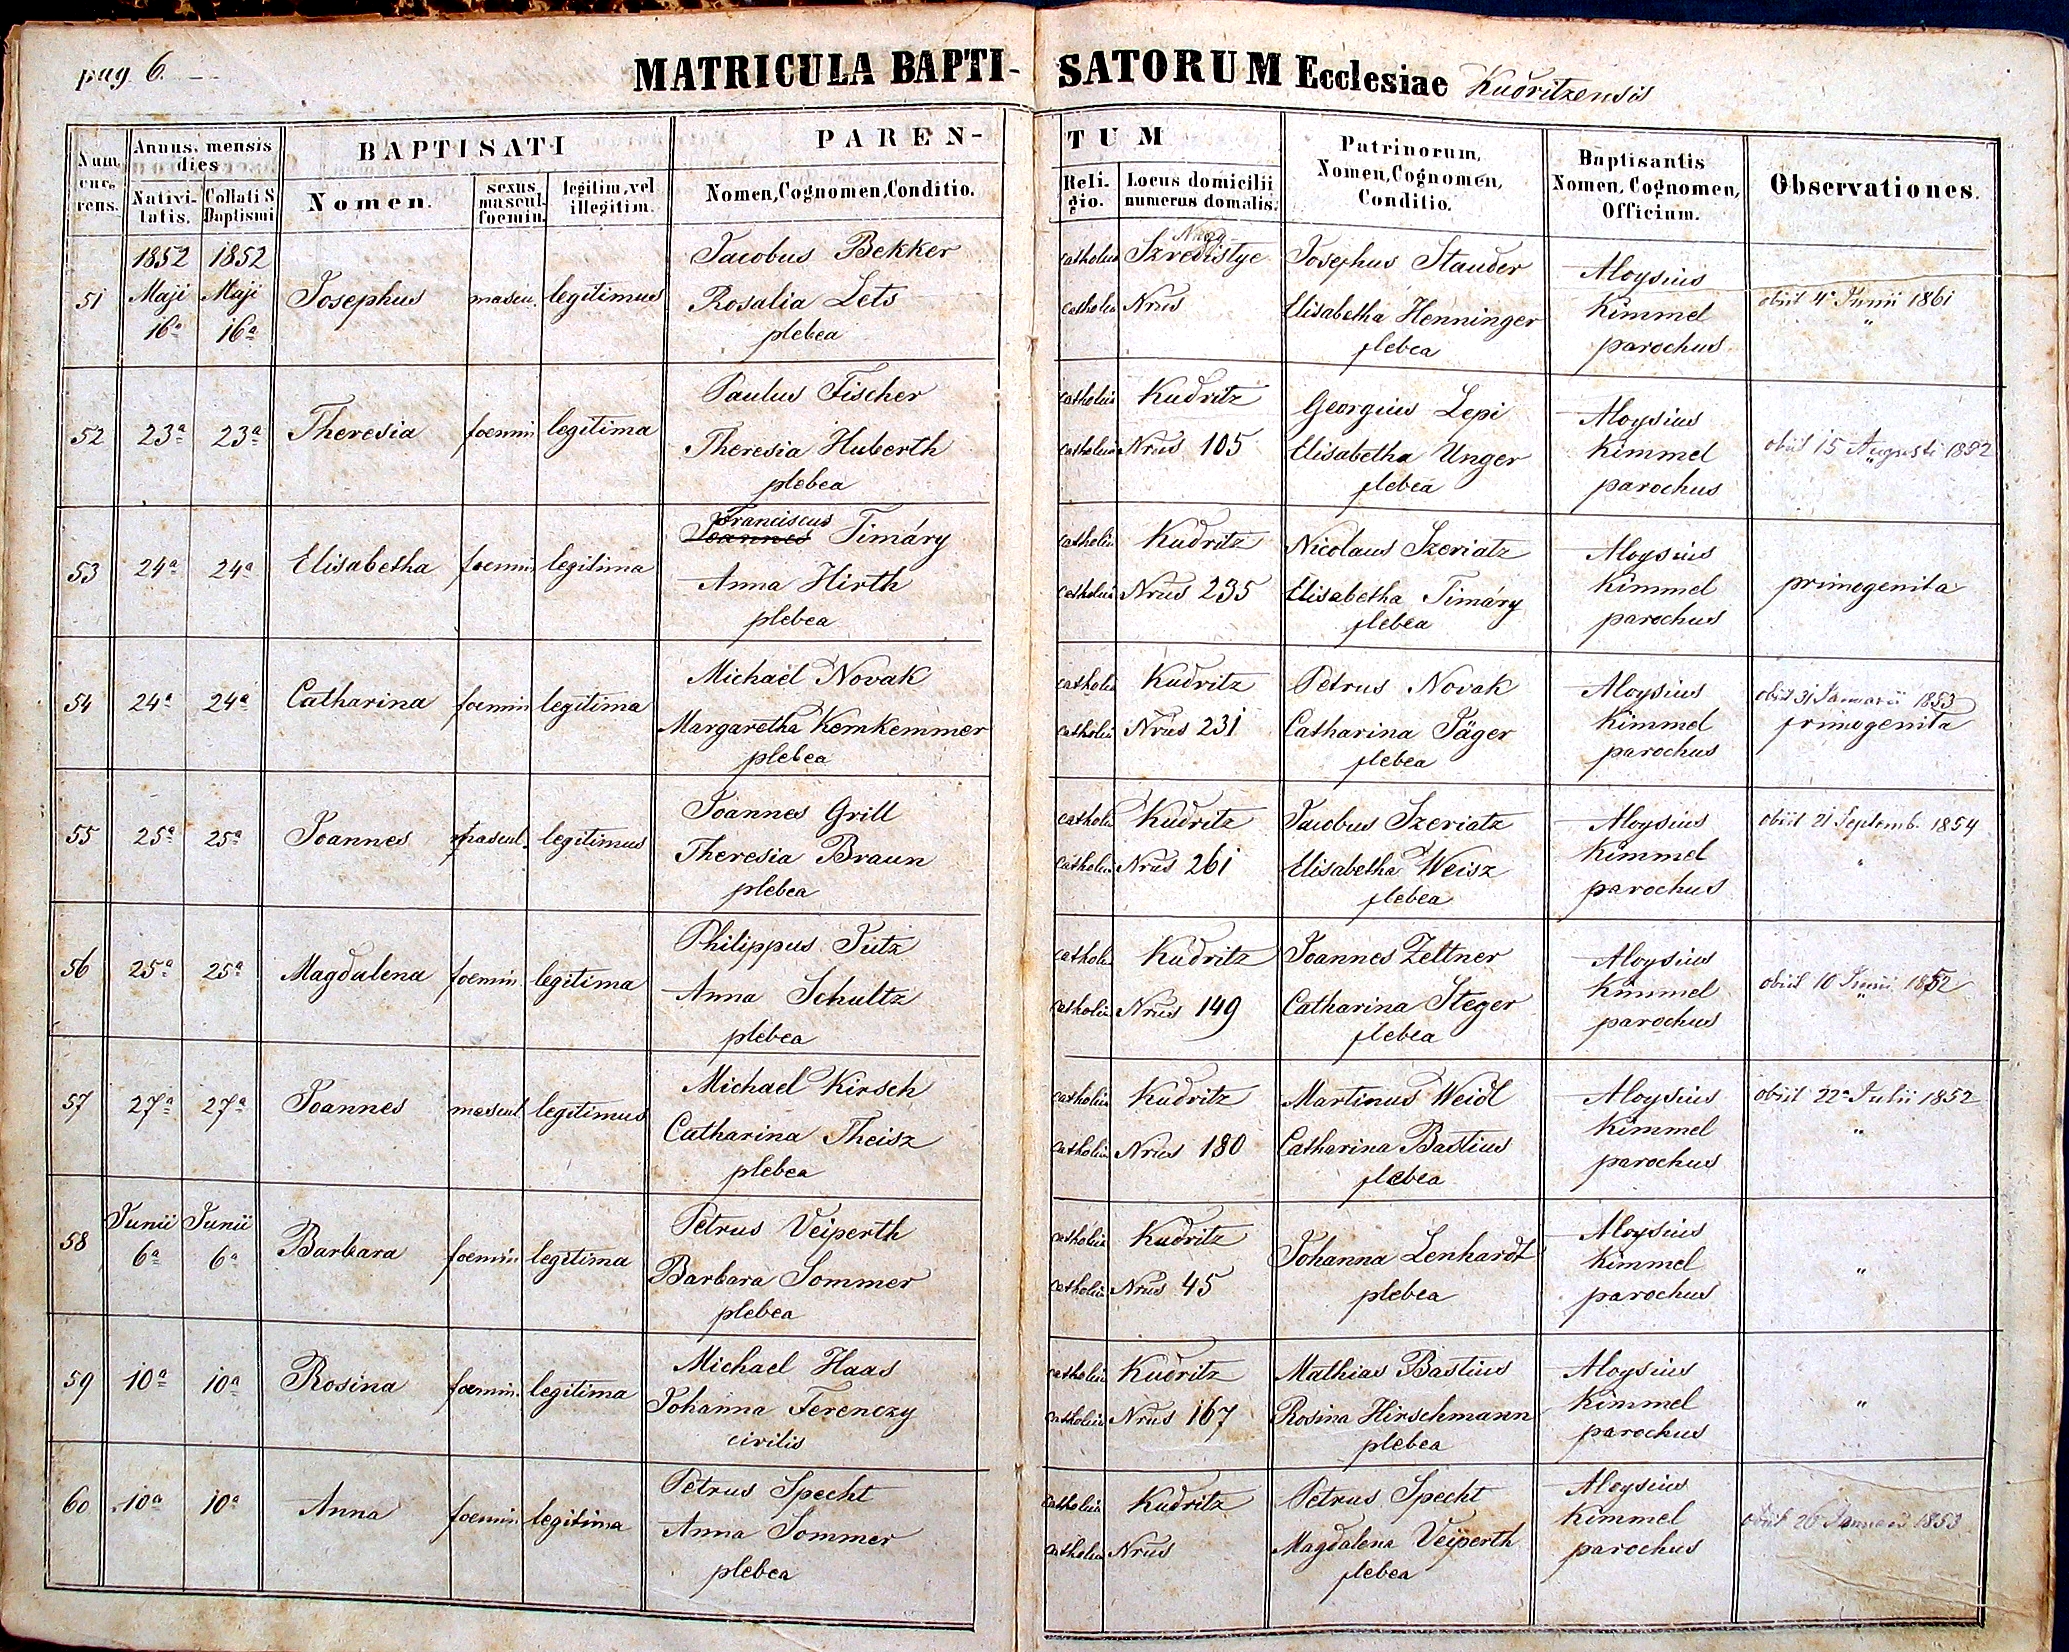 images/church_records/BIRTHS/1870-1879B/1870/006